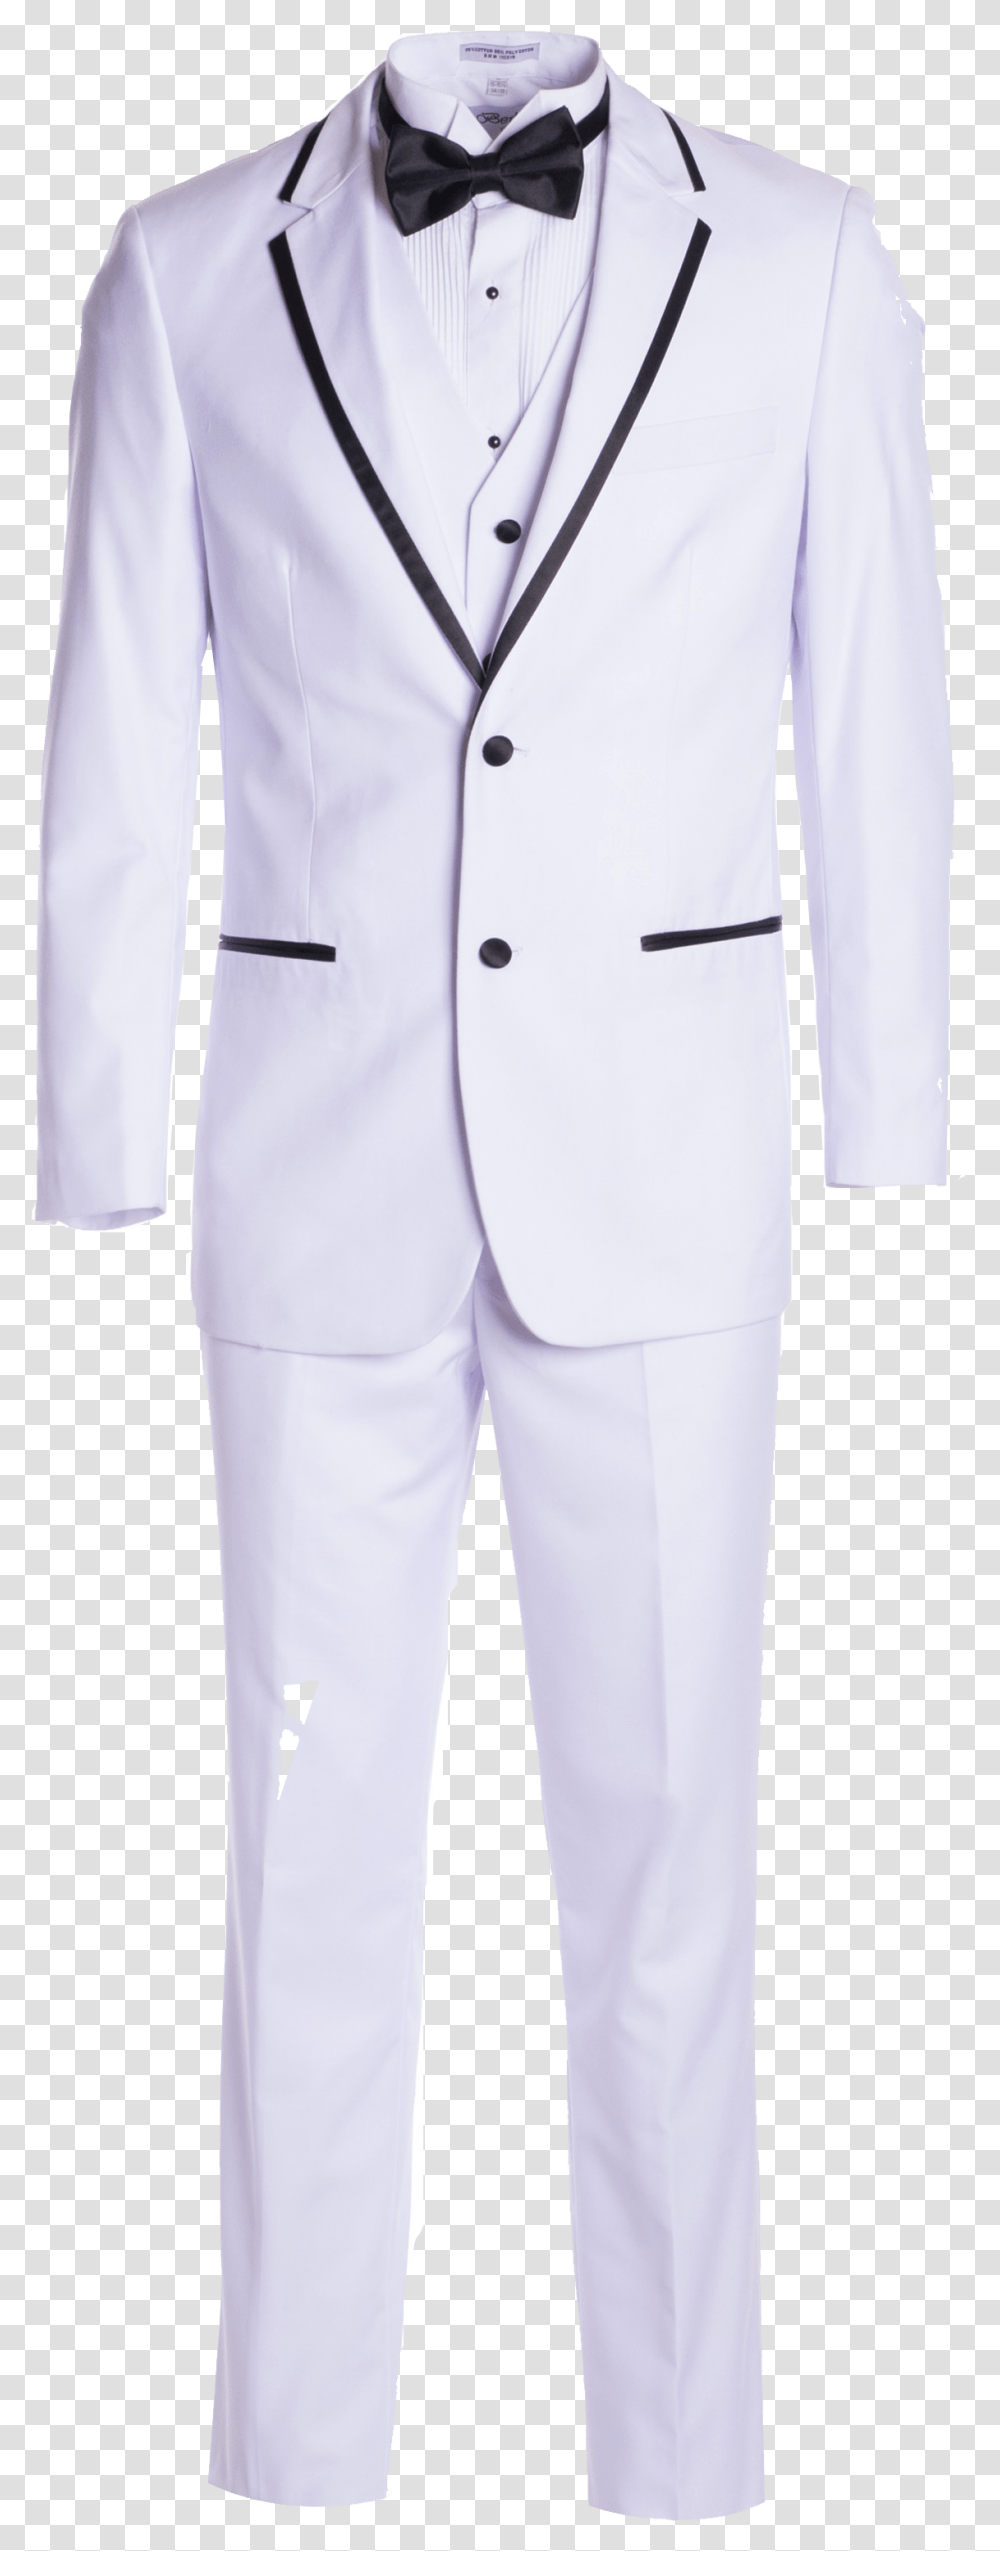 White Tuxedo Image File Tuxedo, Suit, Overcoat, Shirt Transparent Png